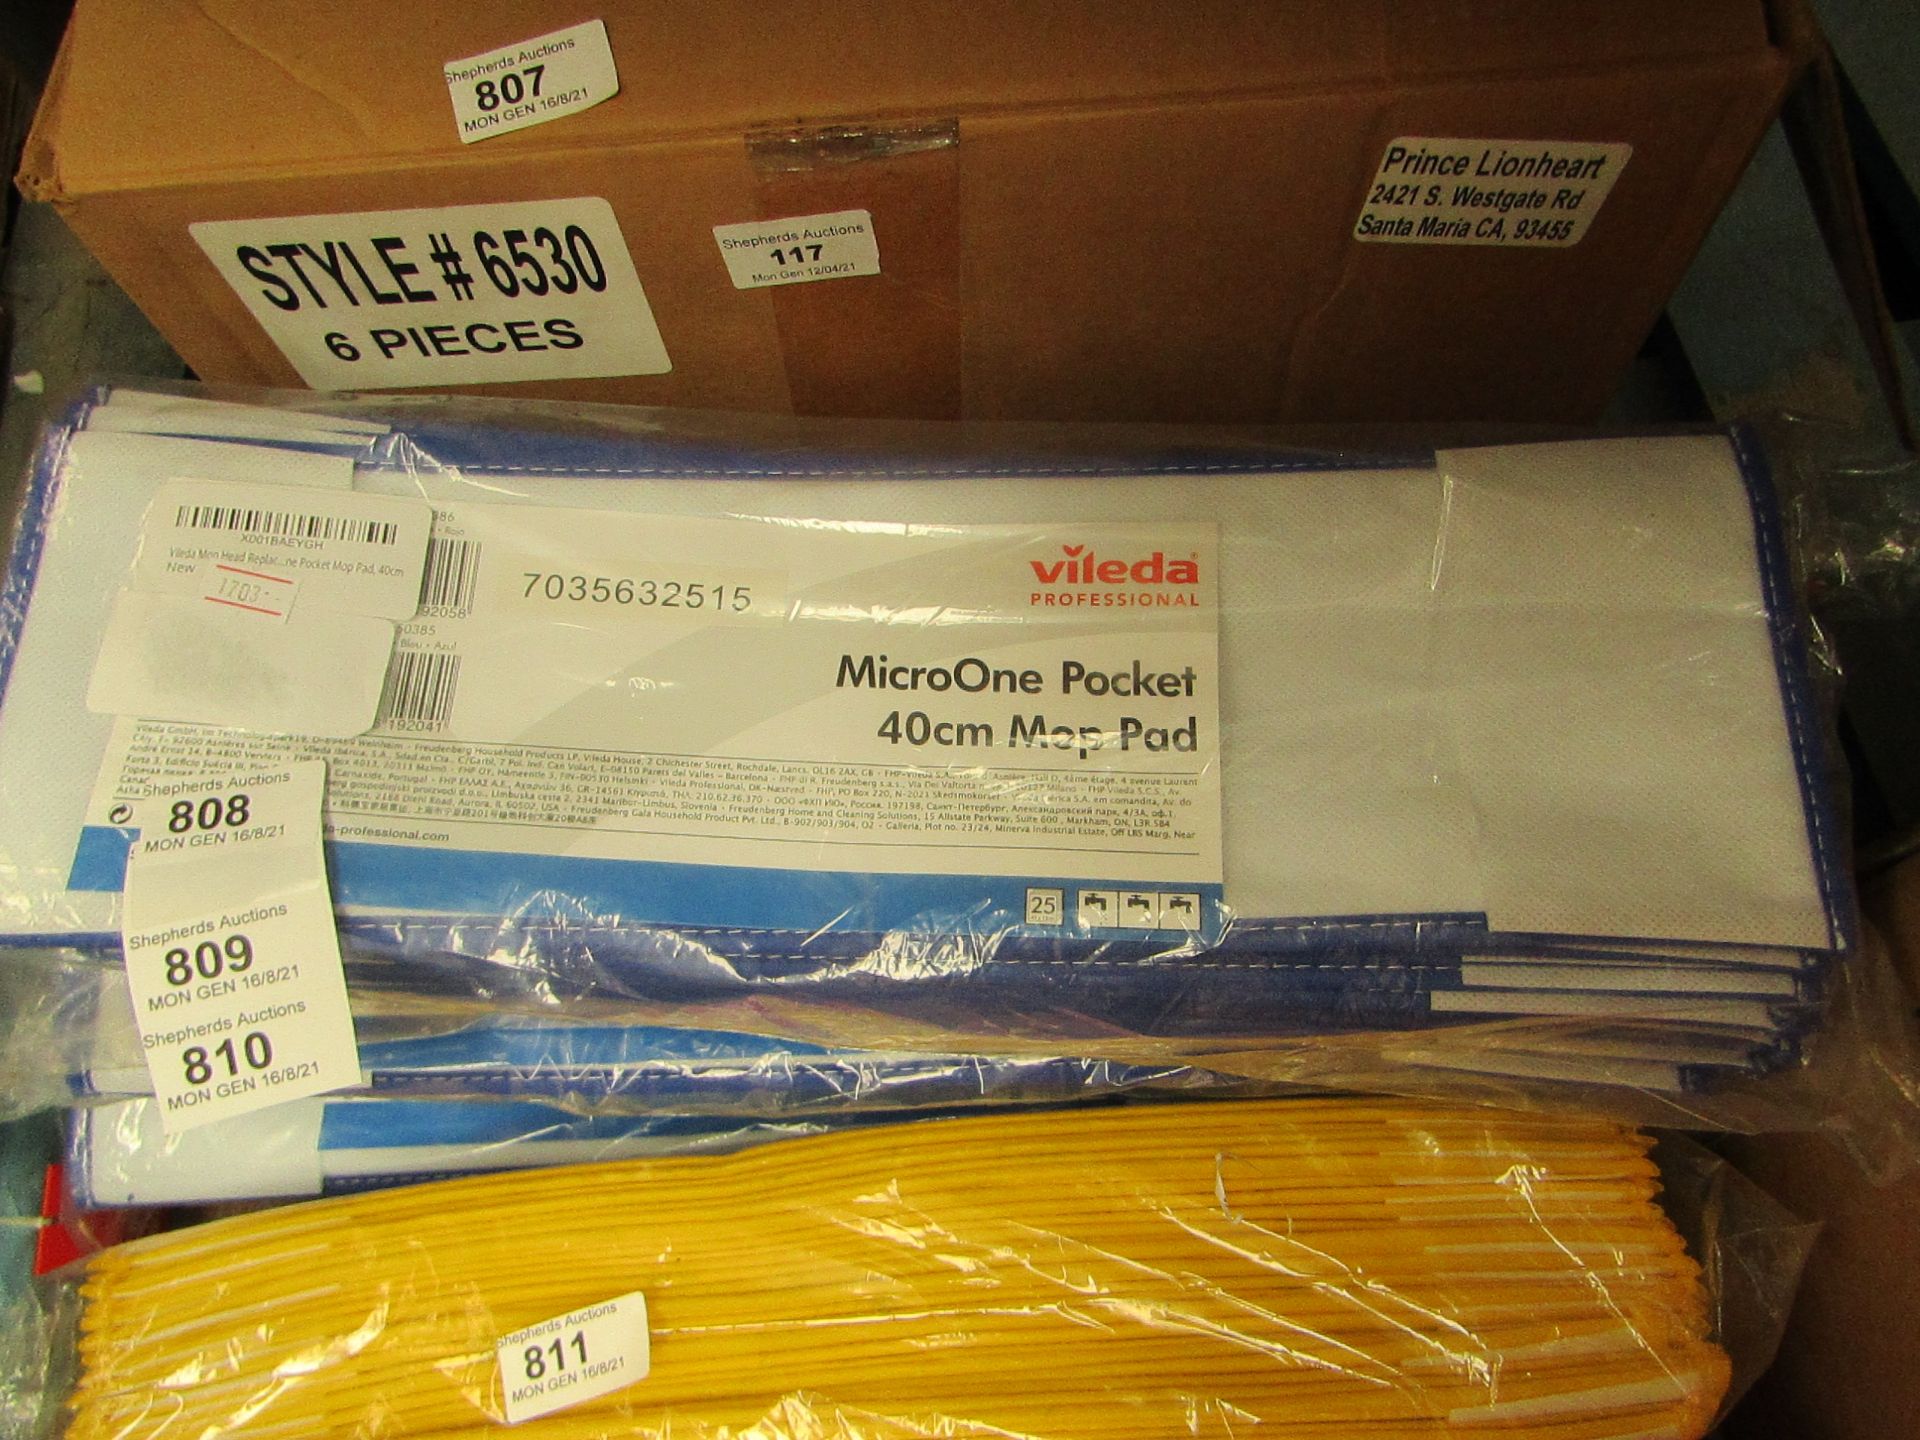 Pack of 25x vileda professional microone pocket 40cm mop pad - new & packaged.